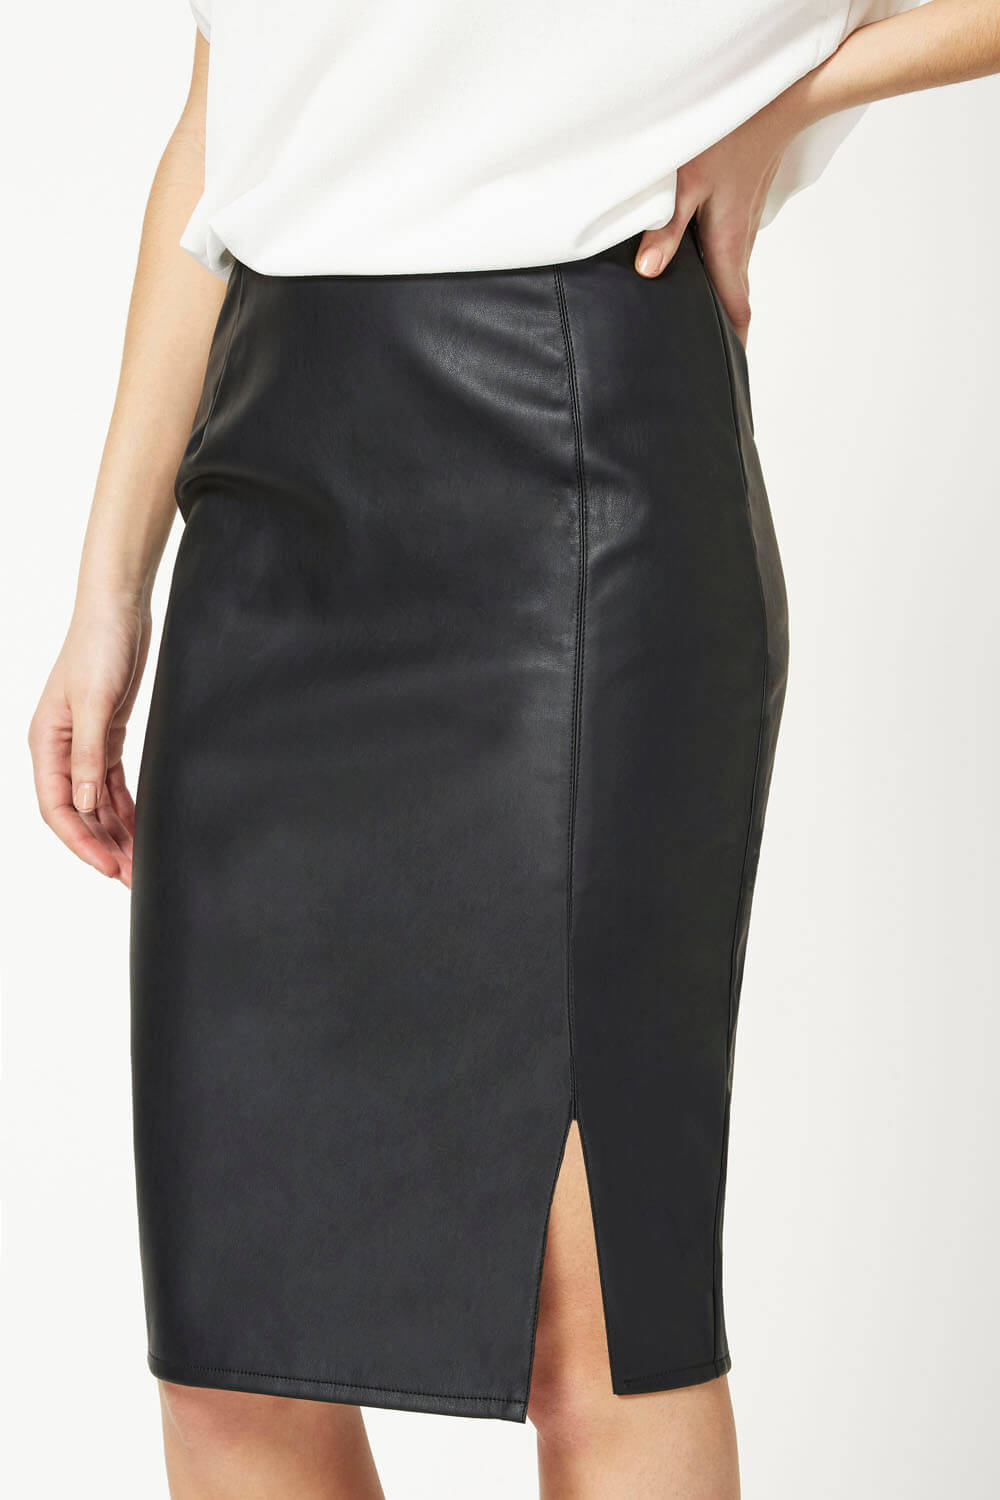 Black Faux Leather Side Split Pencil Skirt, Image 4 of 4